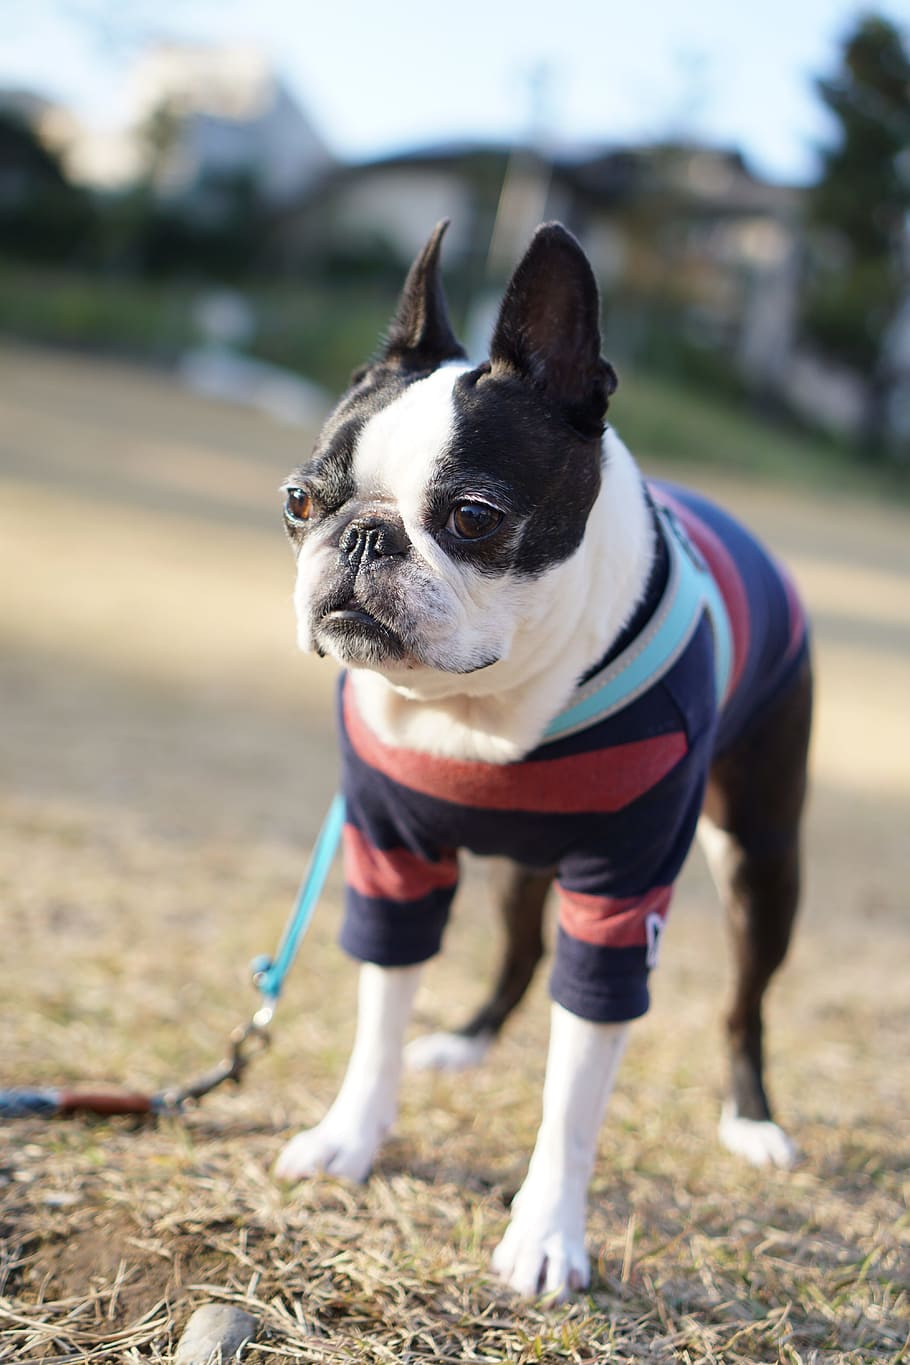 Boston Terrier, Mascota, Dog Run, perro, perros de raza pequeña, perro de interior, pasear al perro, mascotas, animales, bulldog